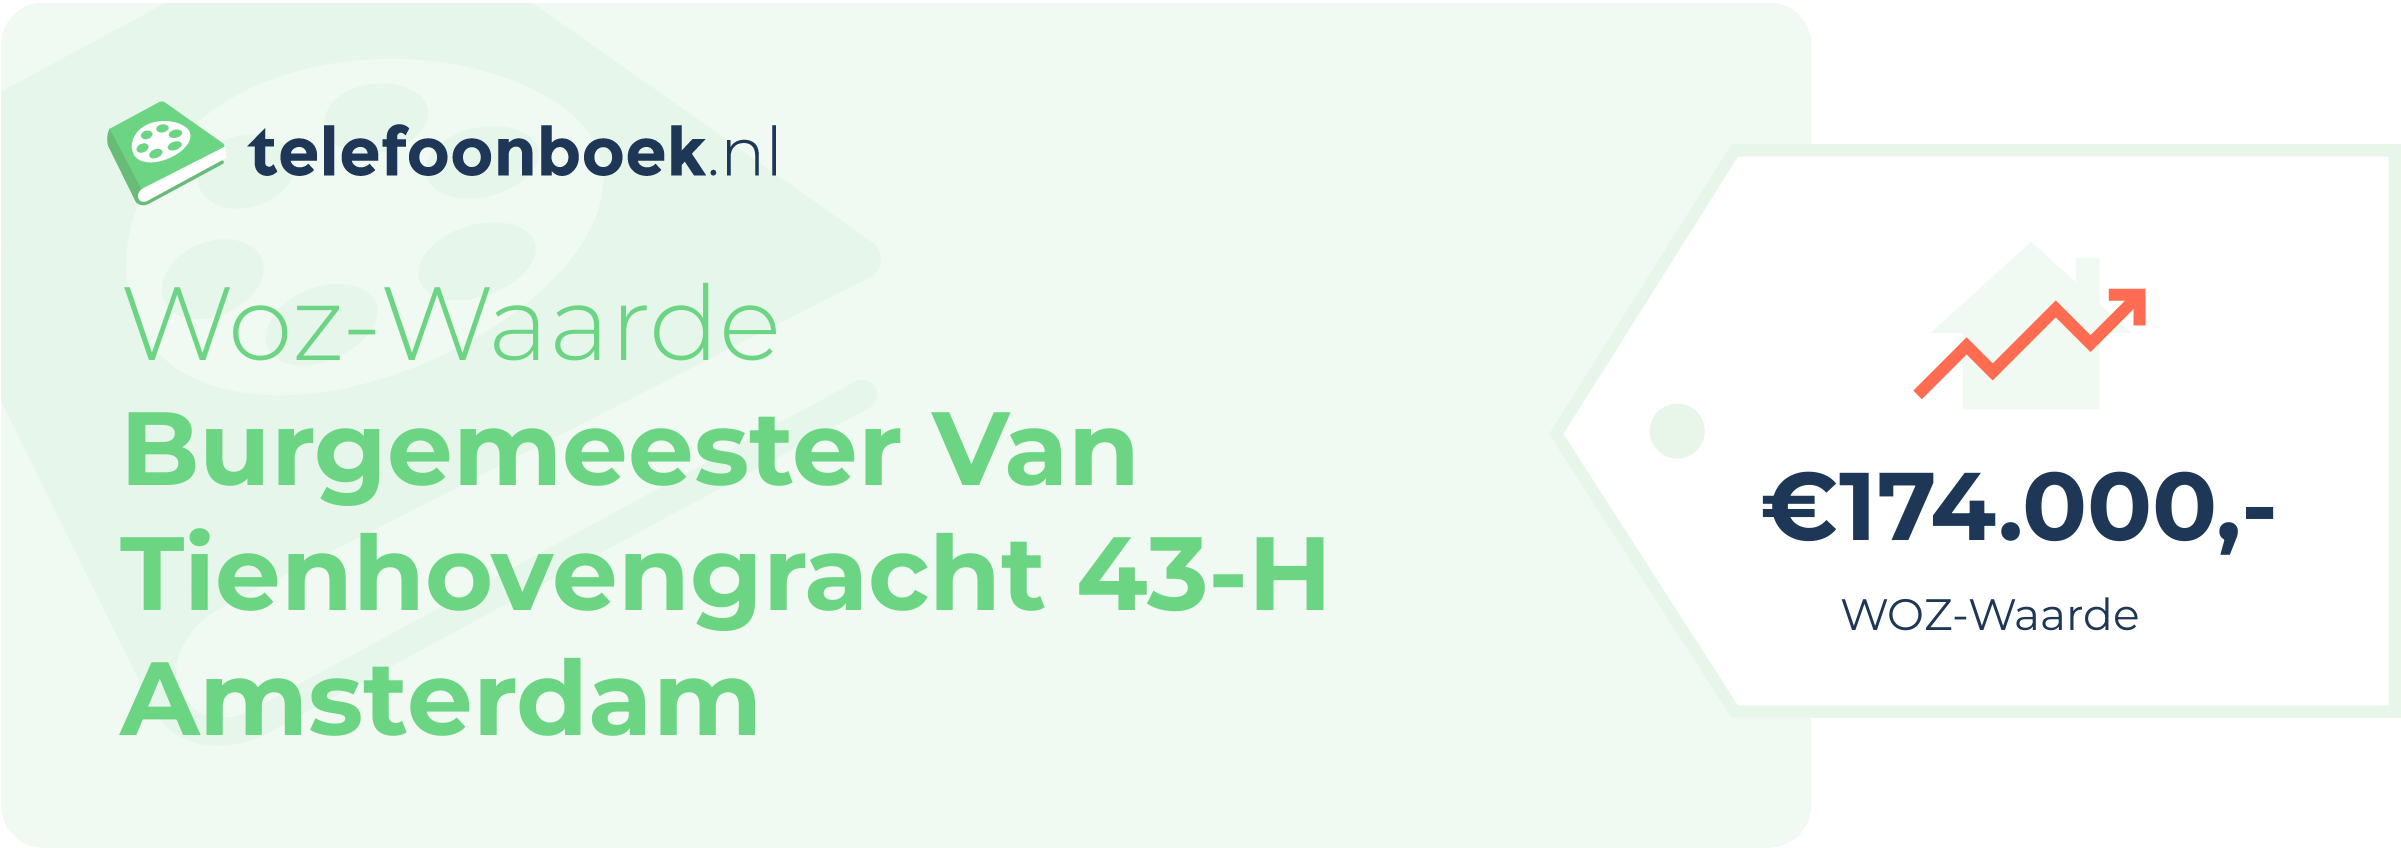 WOZ-waarde Burgemeester Van Tienhovengracht 43-H Amsterdam